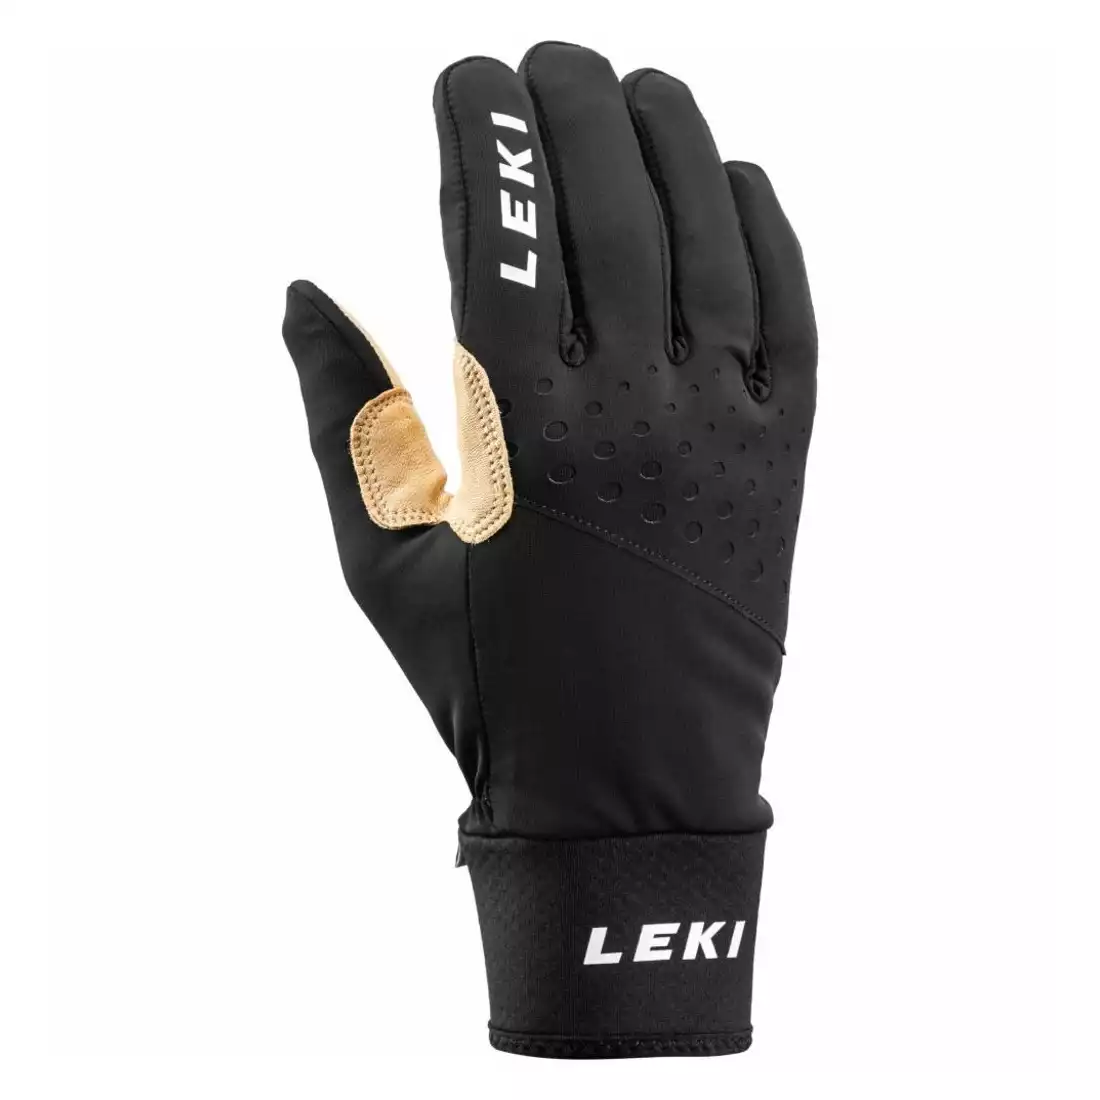 LEKI Nordic Race Premium Winterhandschuhe, schwarz und beige